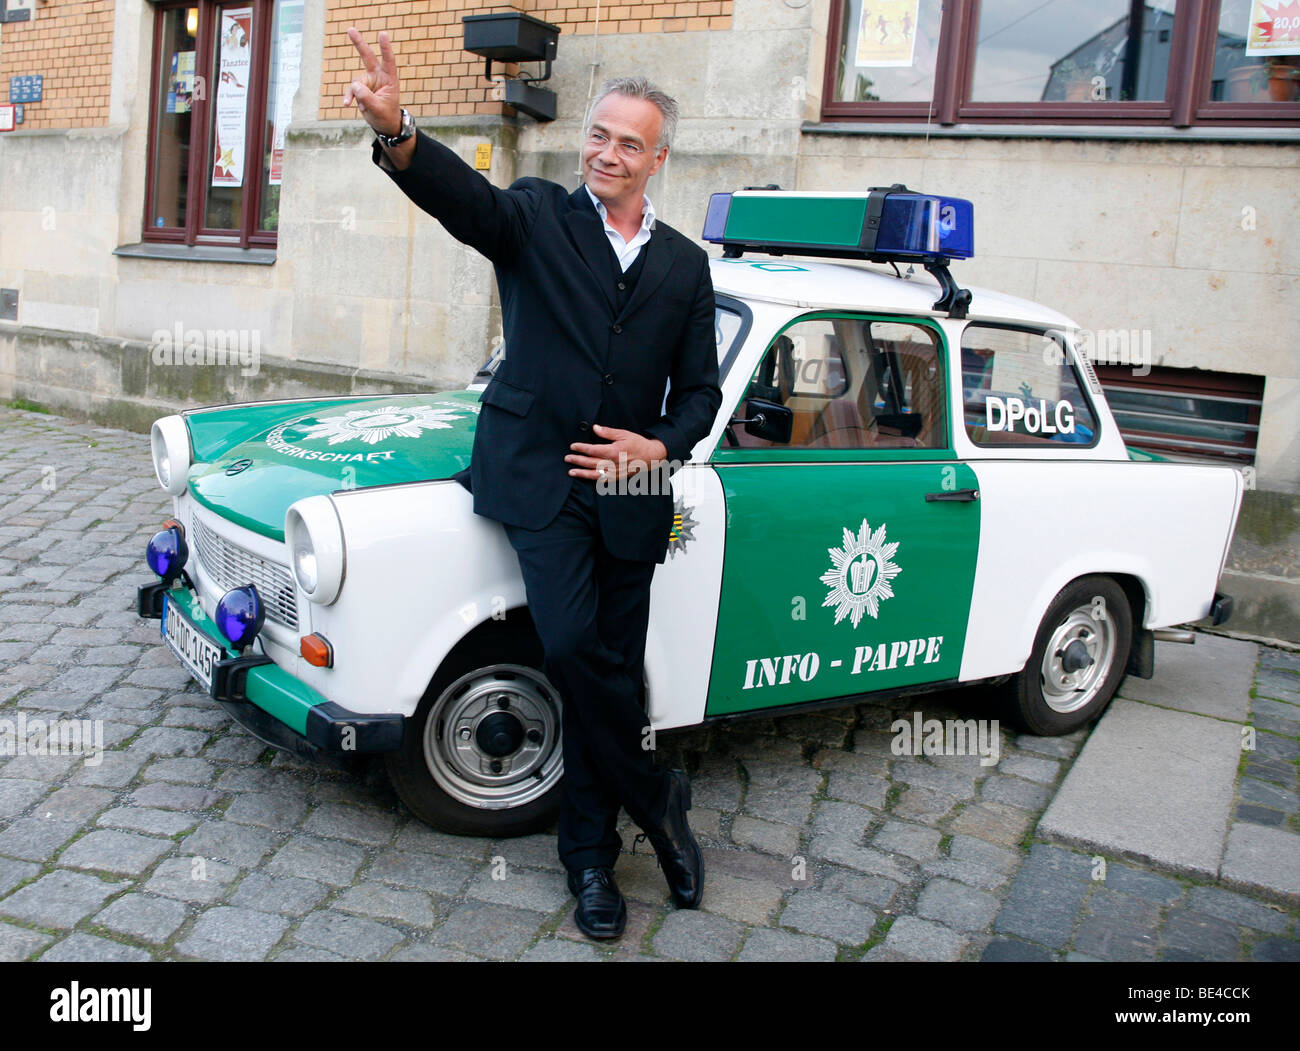 Klaus J. Behrendt, attore " Tatort', TV tedesca serie di criminalità, di fronte a una polizia Trabant vettura Foto Stock